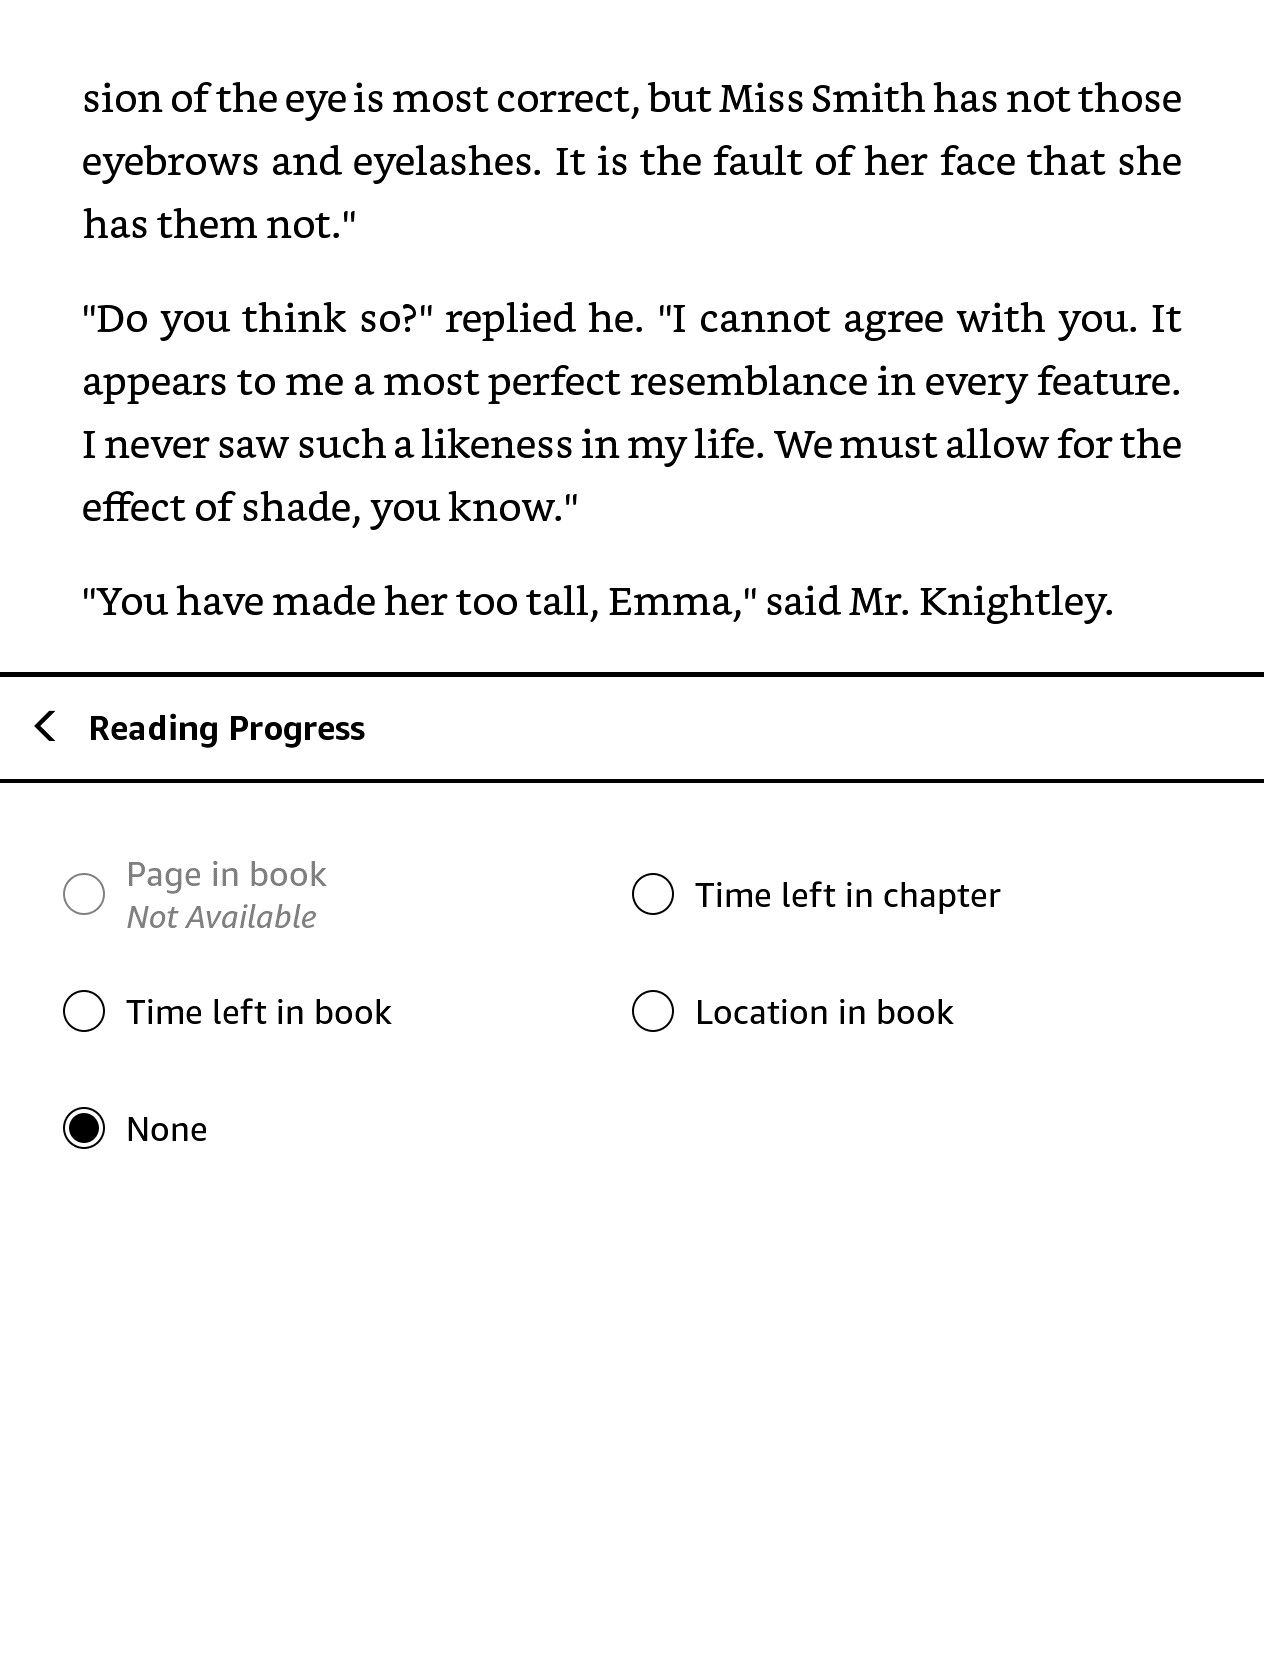 Screenshot of Kindle showing reading progress options